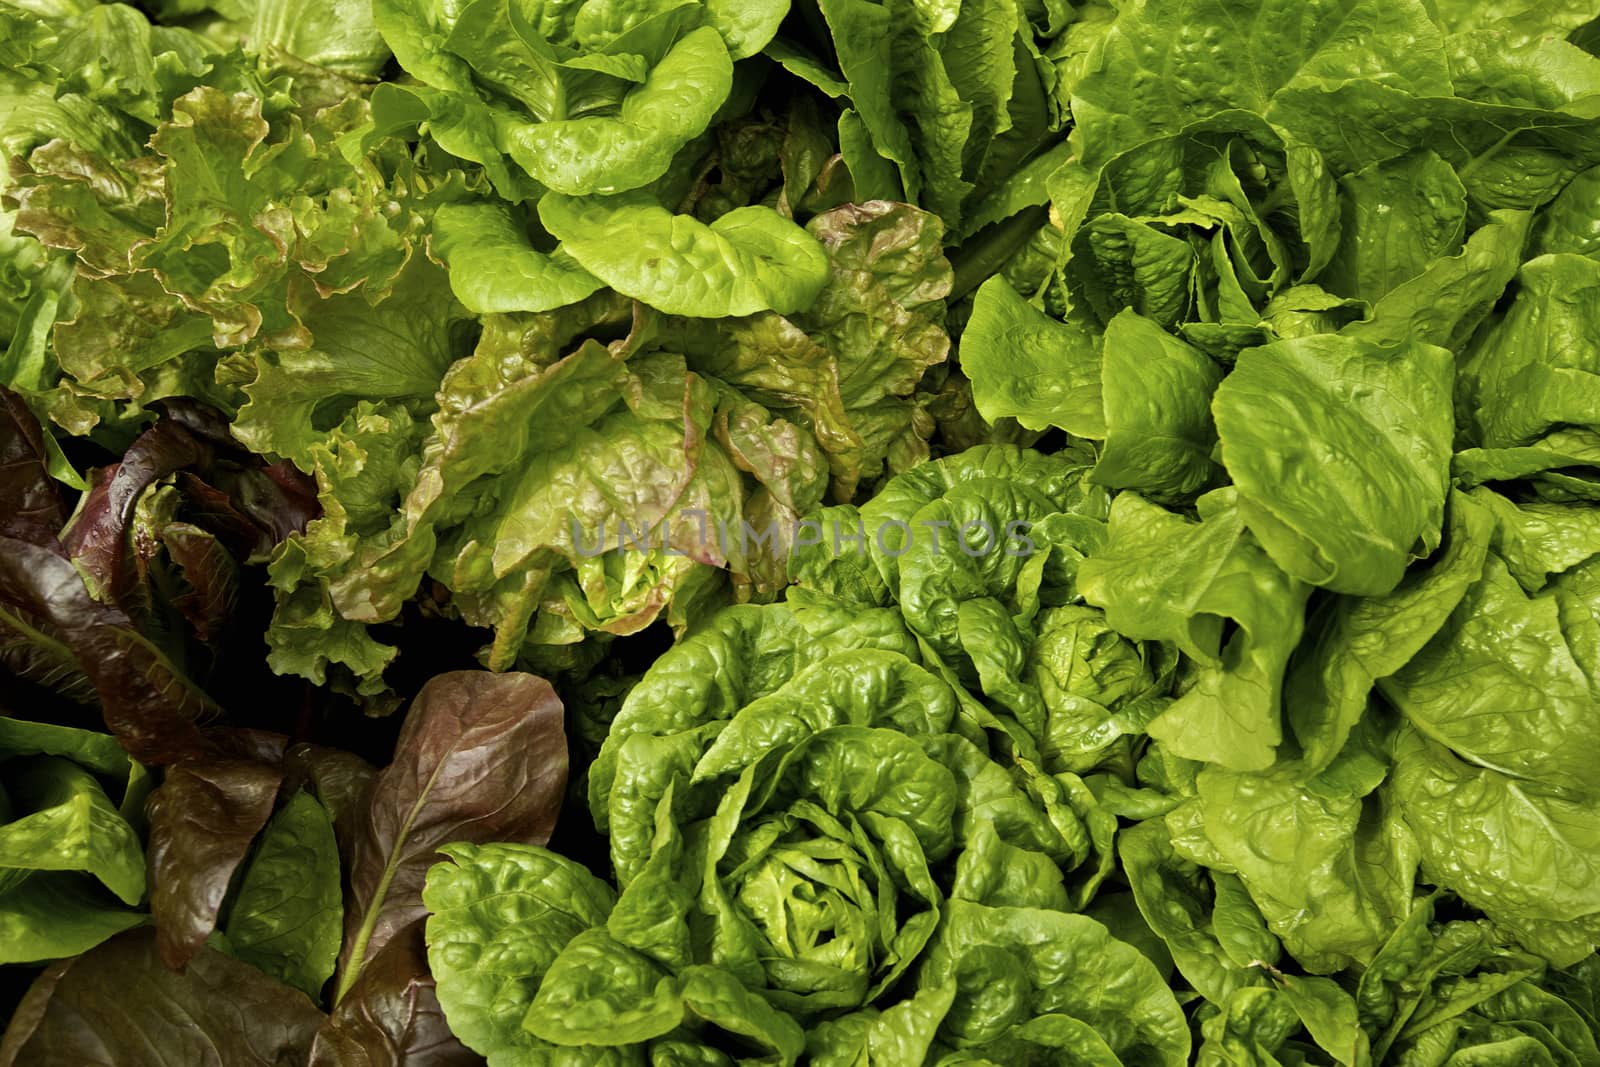 Fresh lettuce, Vegetable garden with healthy organic salad leaves